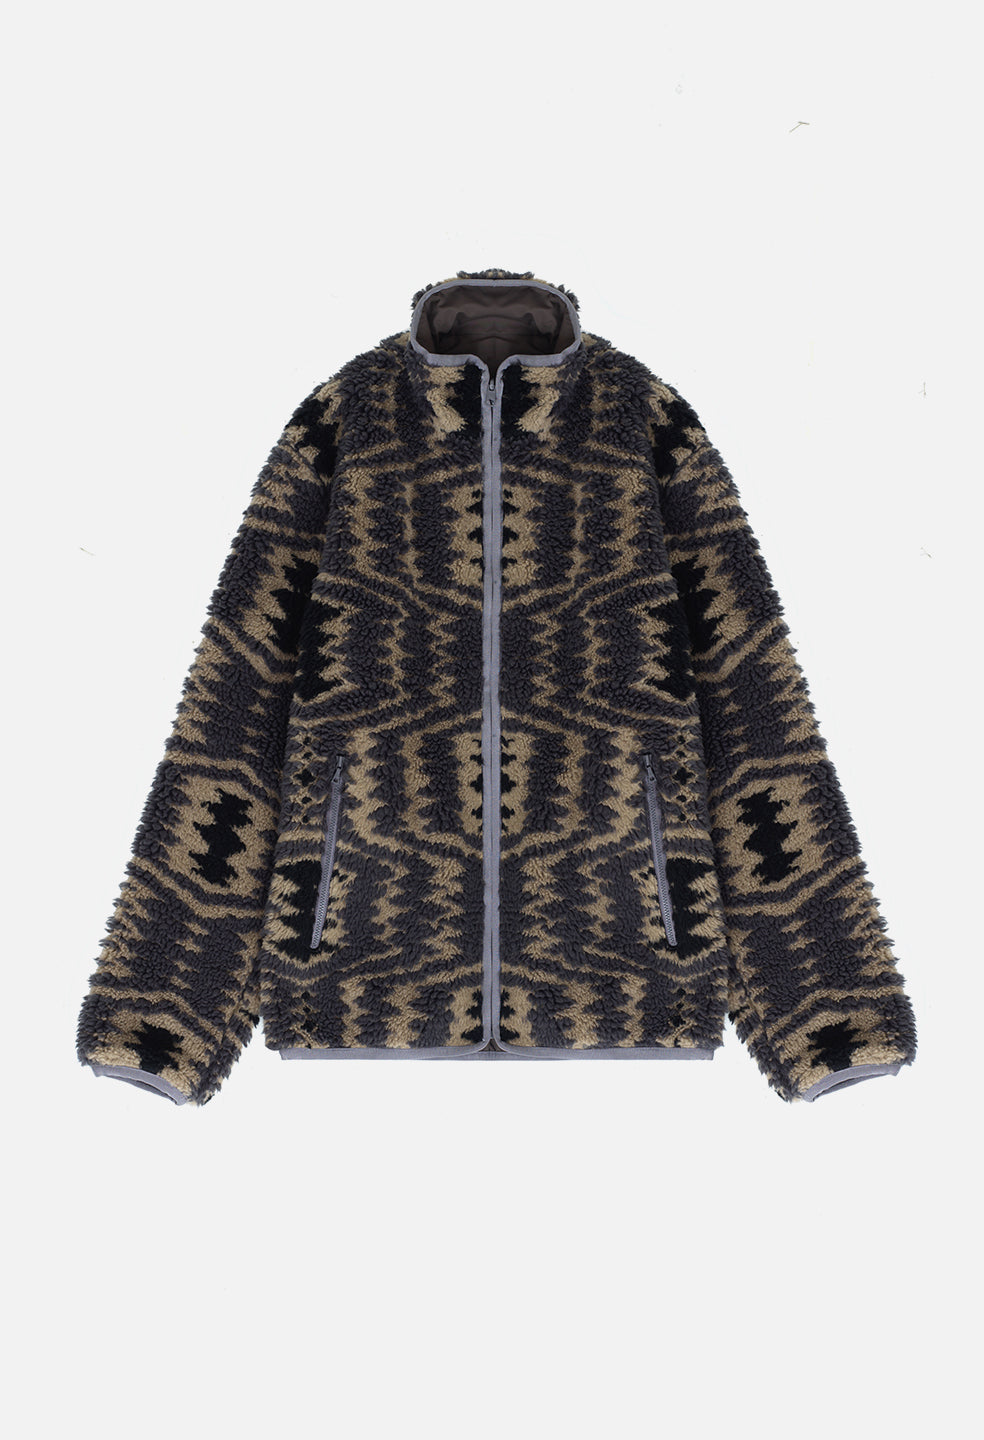 MZR - Bonded Fleece Full-Zip Jacket – J.Carroll